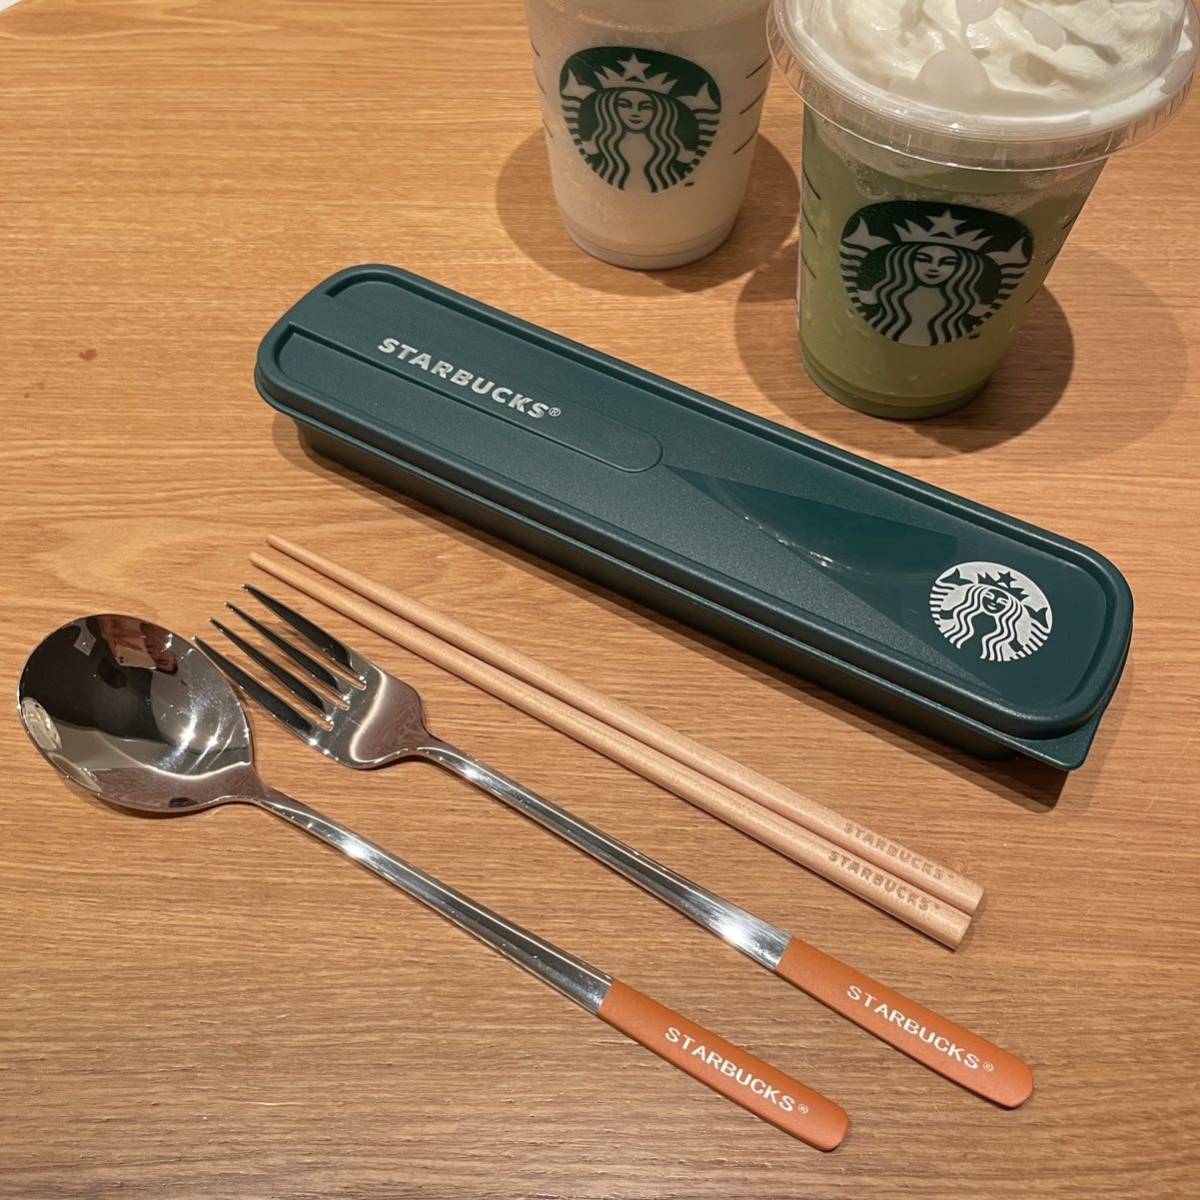  abroad limitation start ba Starbucks cutlery tableware set exclusive use box attaching .. green 